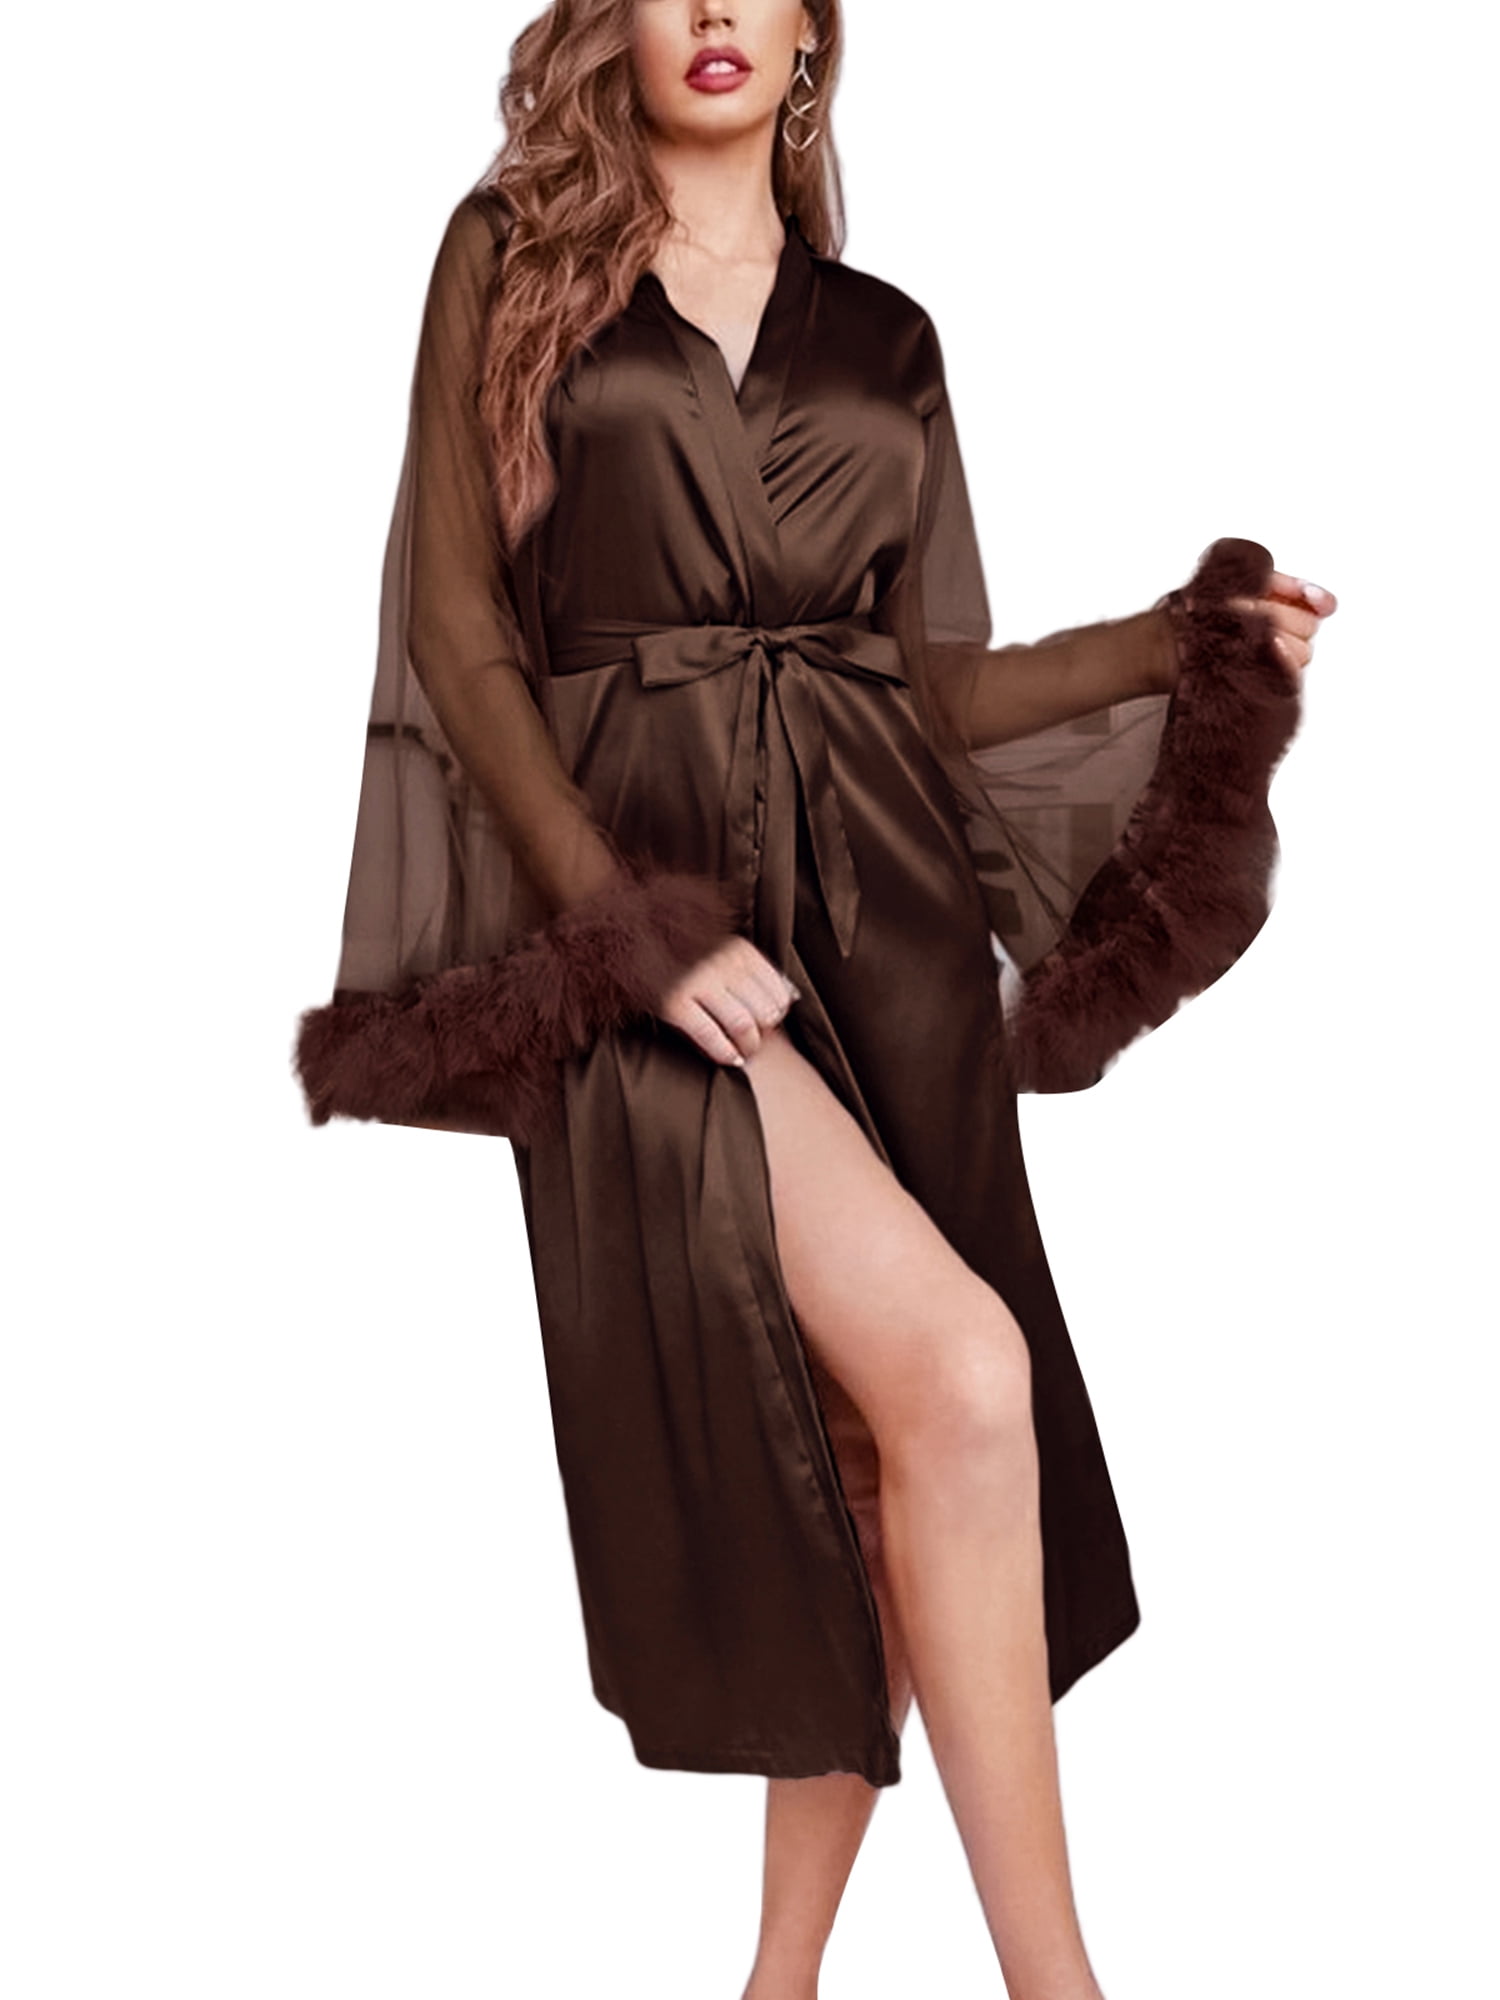 SUNSION Women Lingerie Robe Long Sheer Kimono Robe Nightgown Bridal Robe with Fur Walmart.com